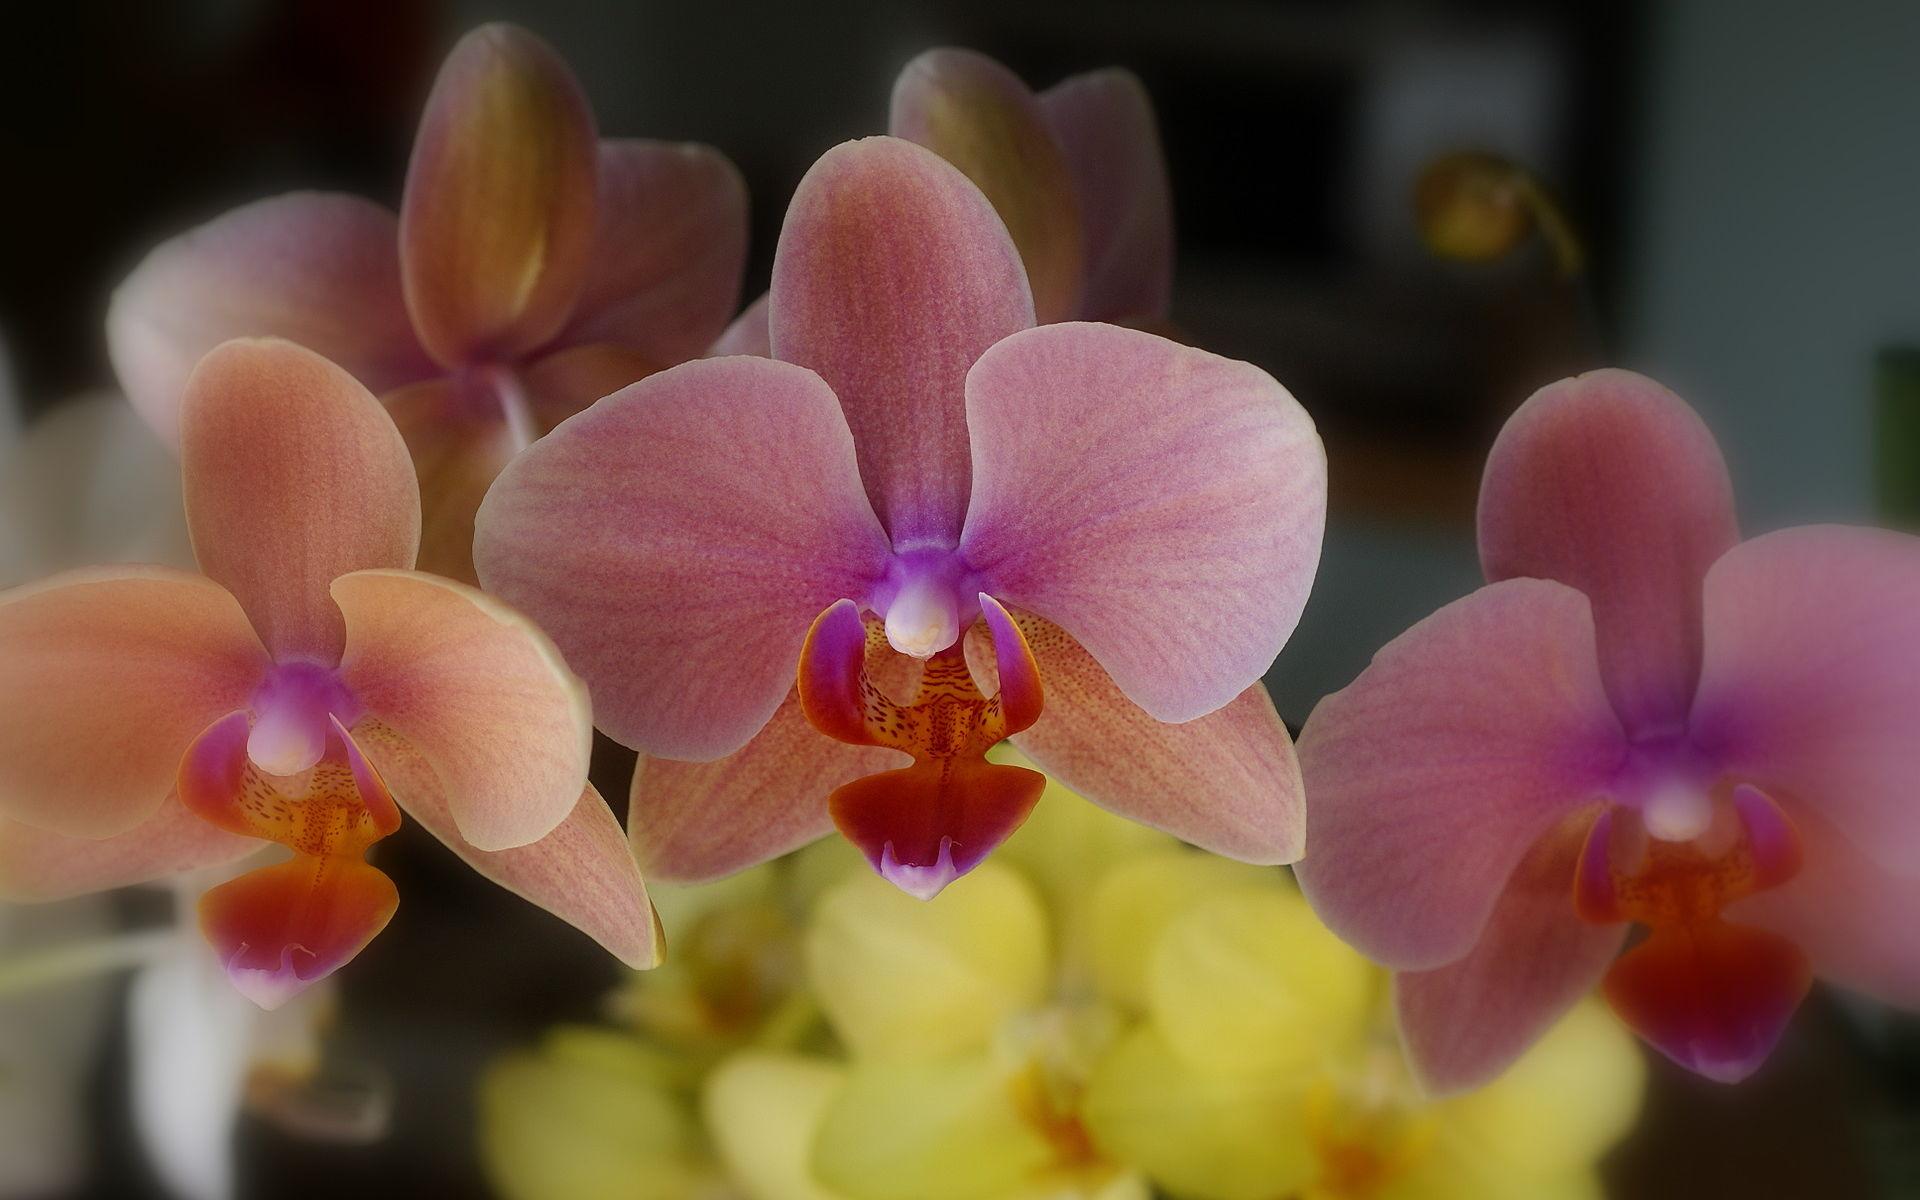 Orchid flower, Orchids photo wallpaper for your desktop